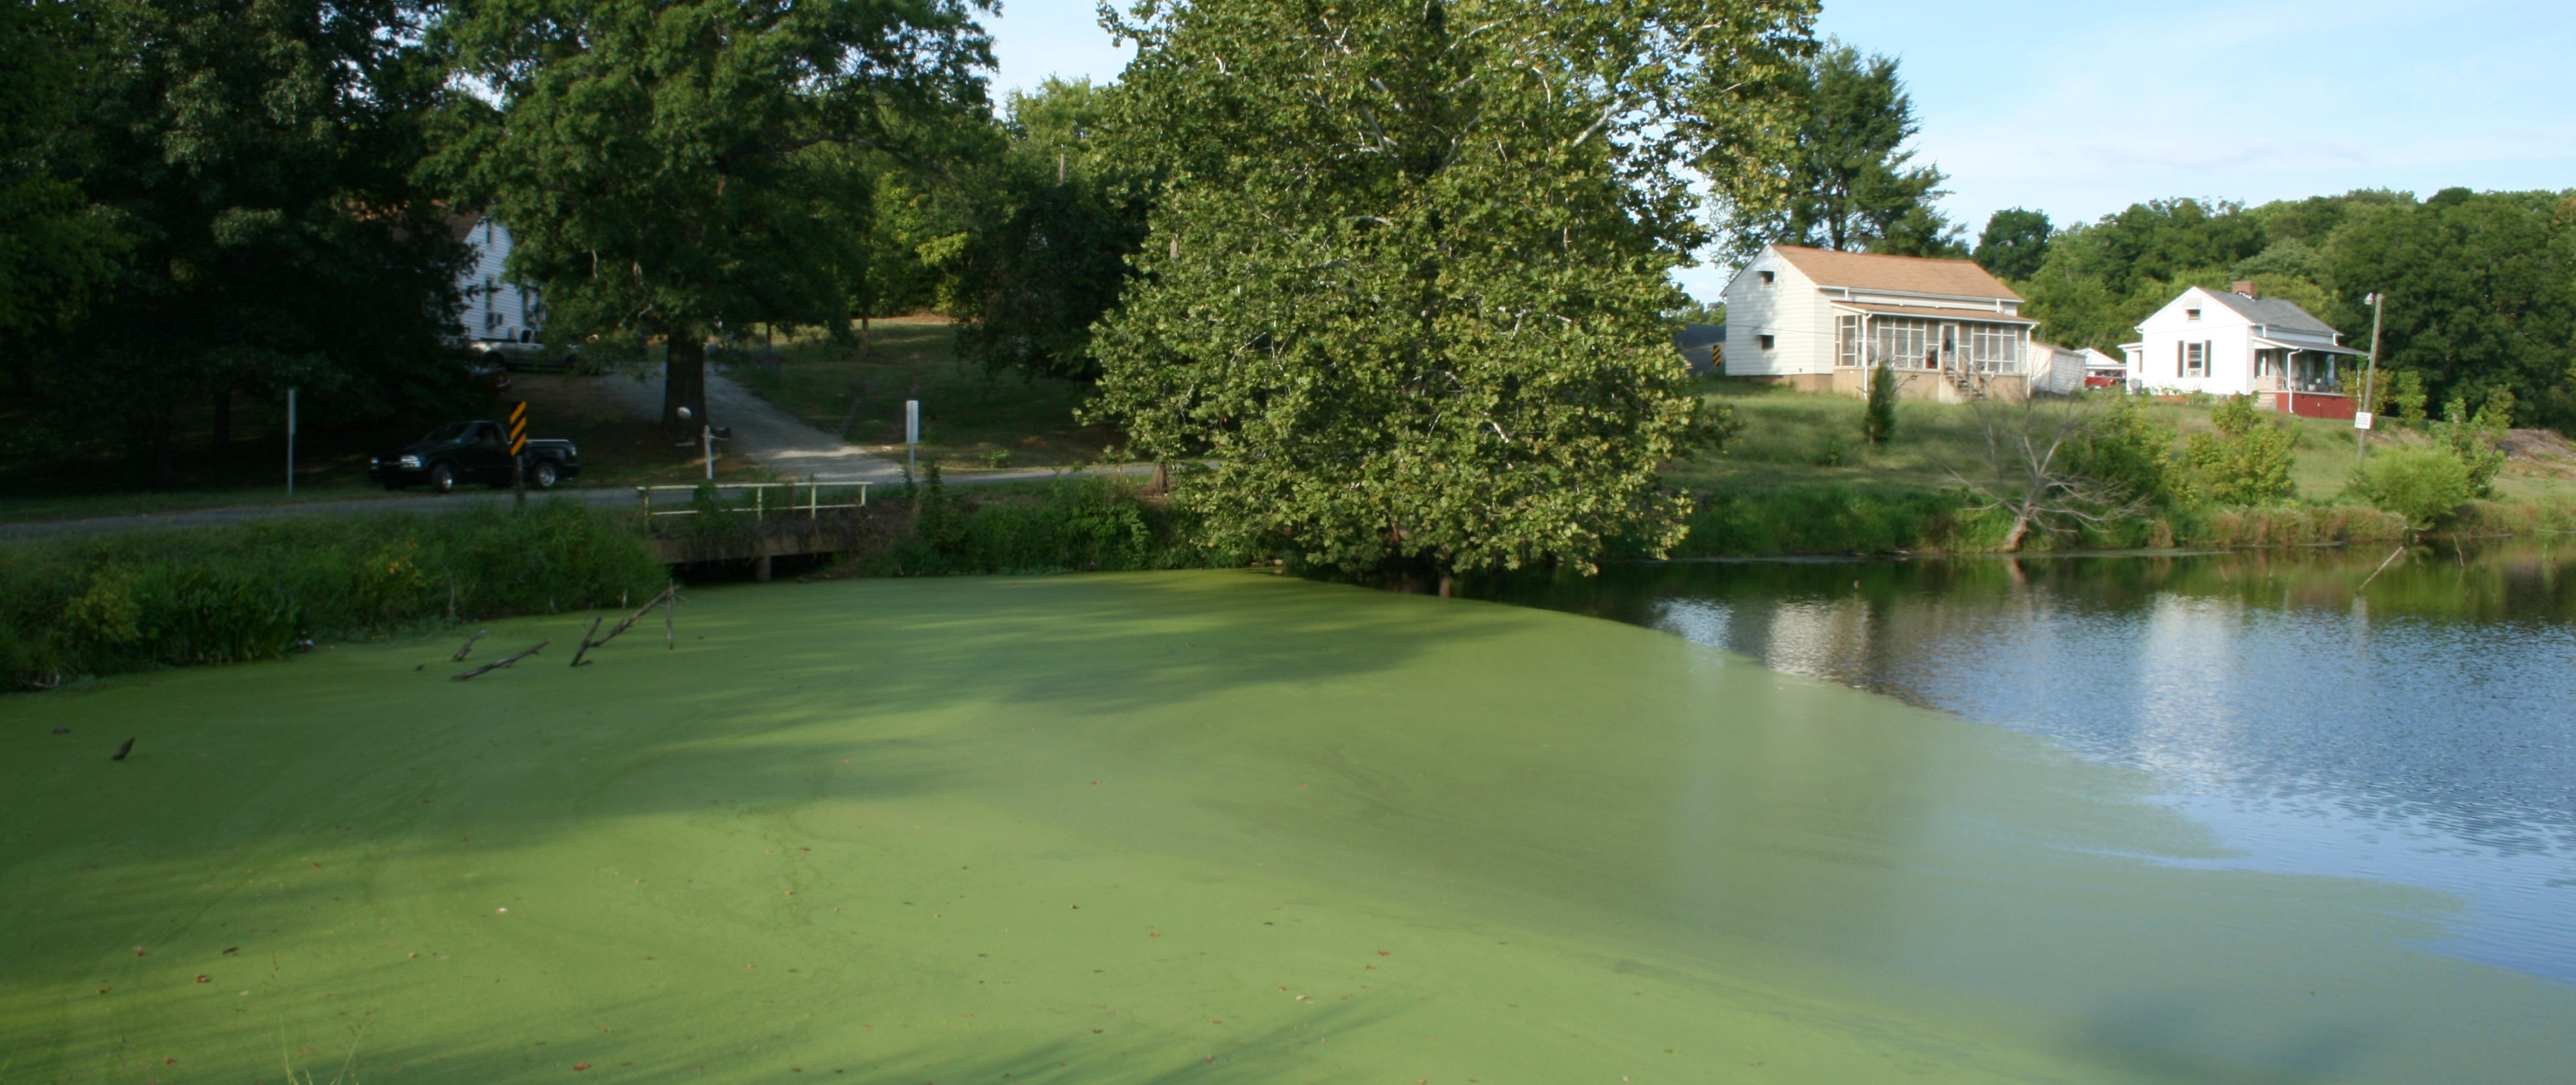 Algae blooming in pond near white house